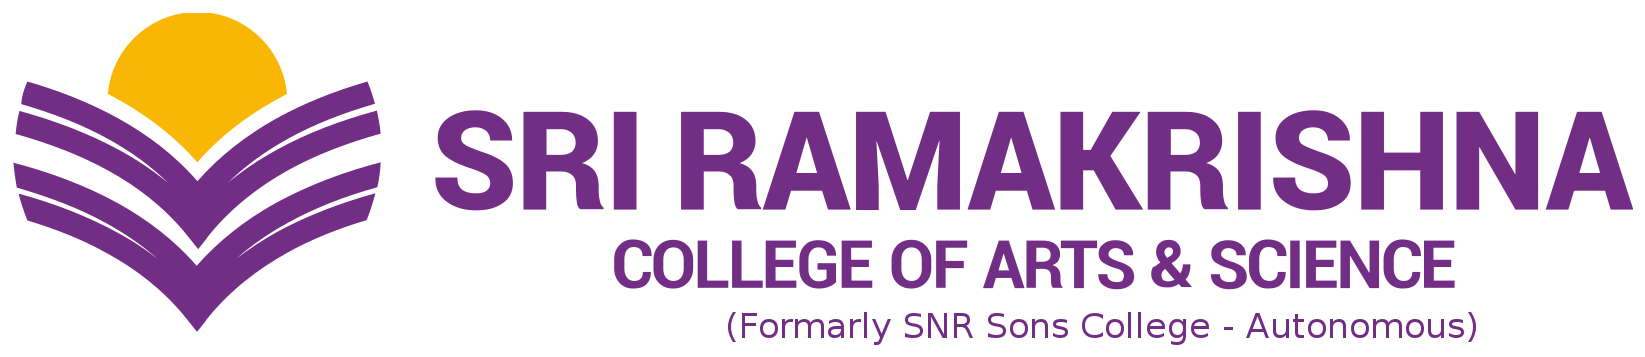 Sri_Ramakrishna_College_of_Arts_and_Science